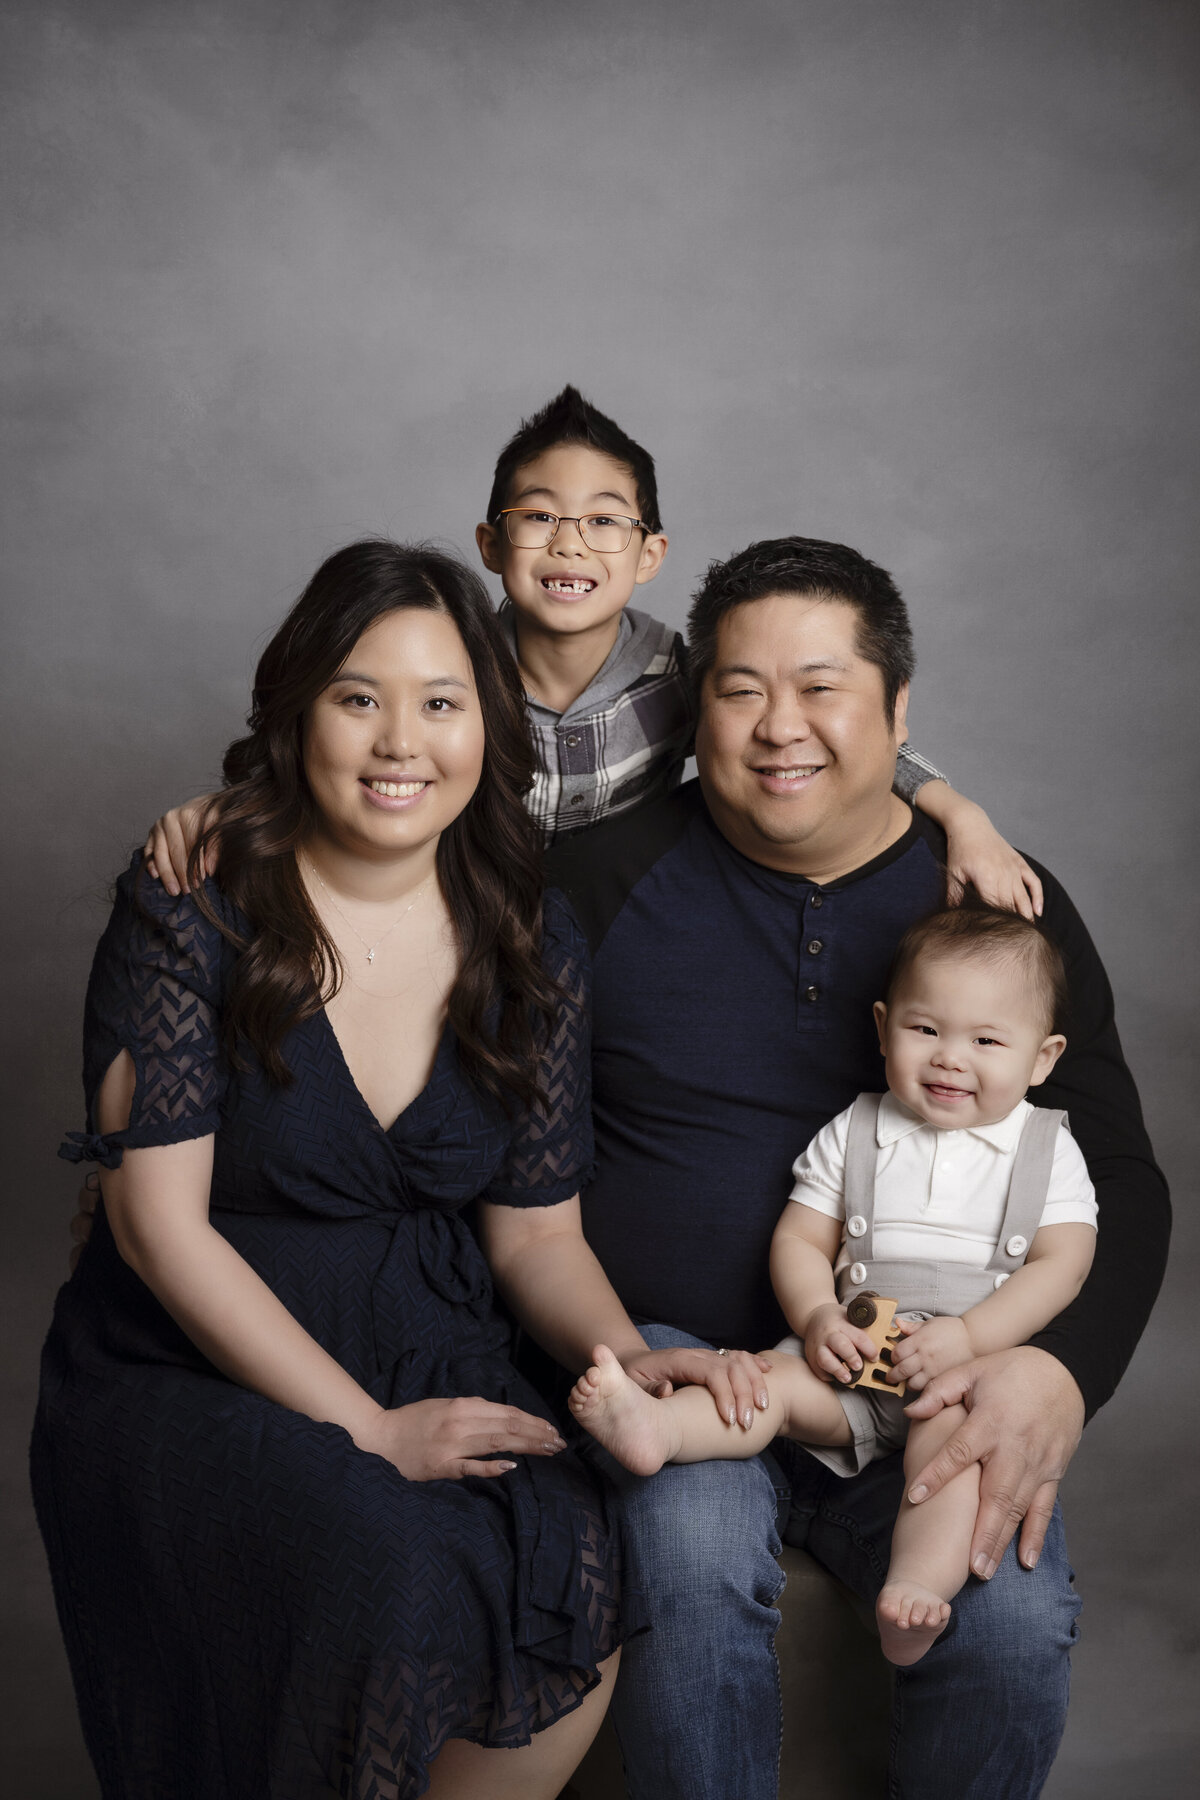 Edmonton Family Photographer